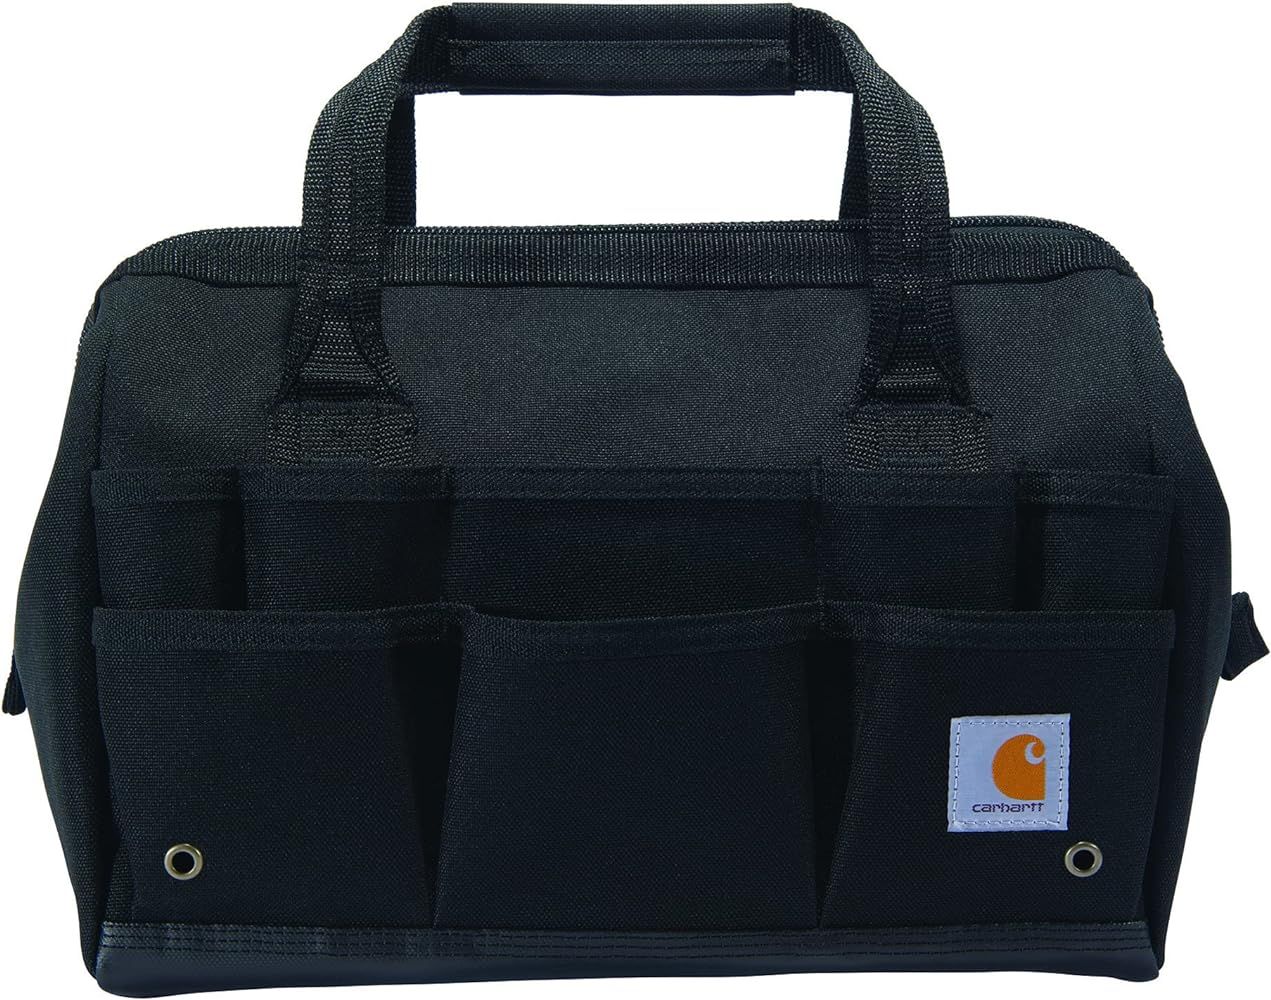 Carhartt Gear B0000351 14-Inch 25 Pocket Heavyweight Tool Bag - One Size Fits All - Black | Amazon (US)